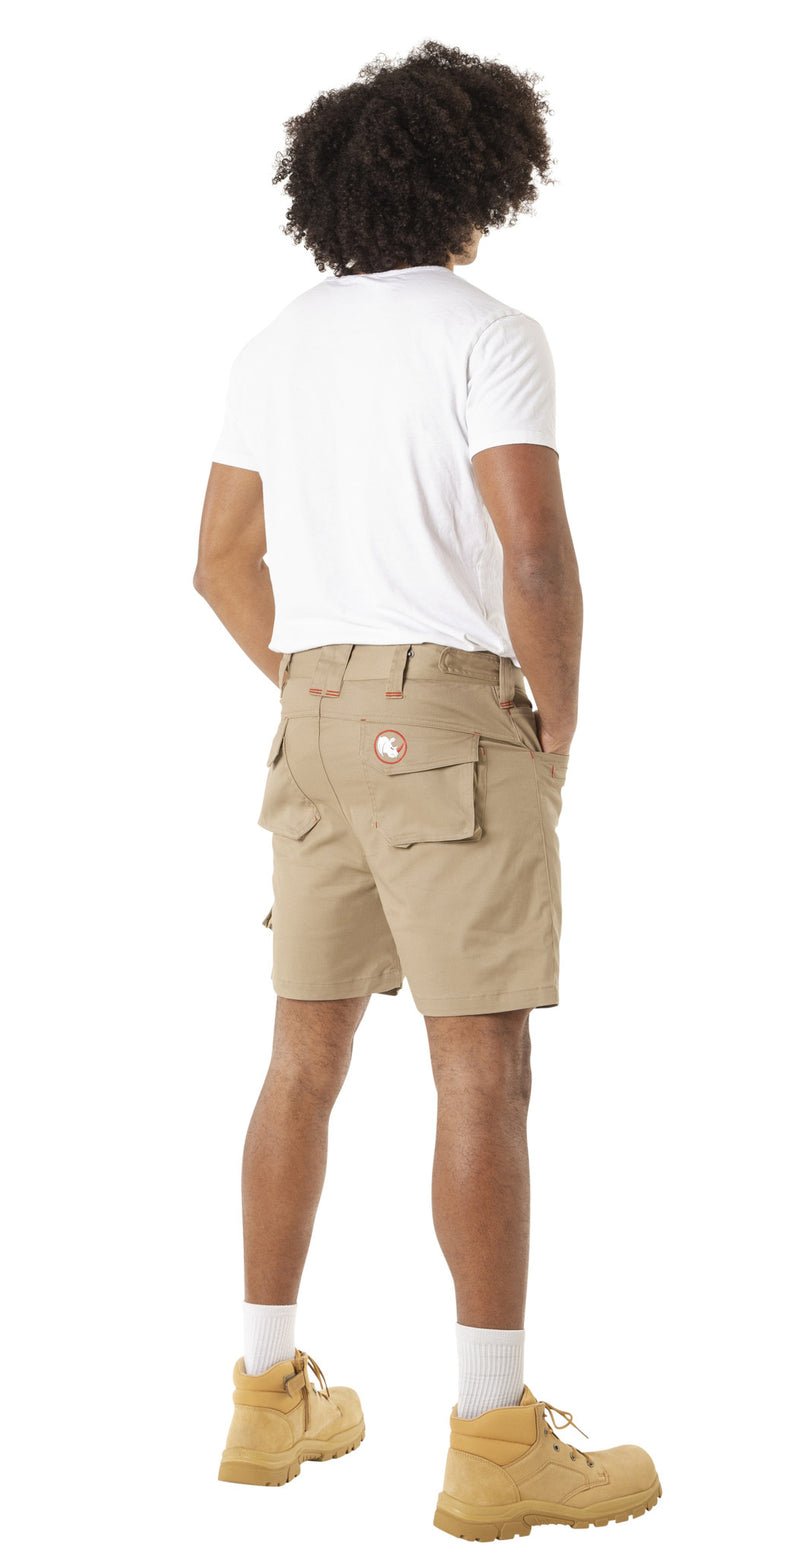 Mens Work Shorts Flexible Durable Tough - Beige Khaki [ SIZE 38 ]